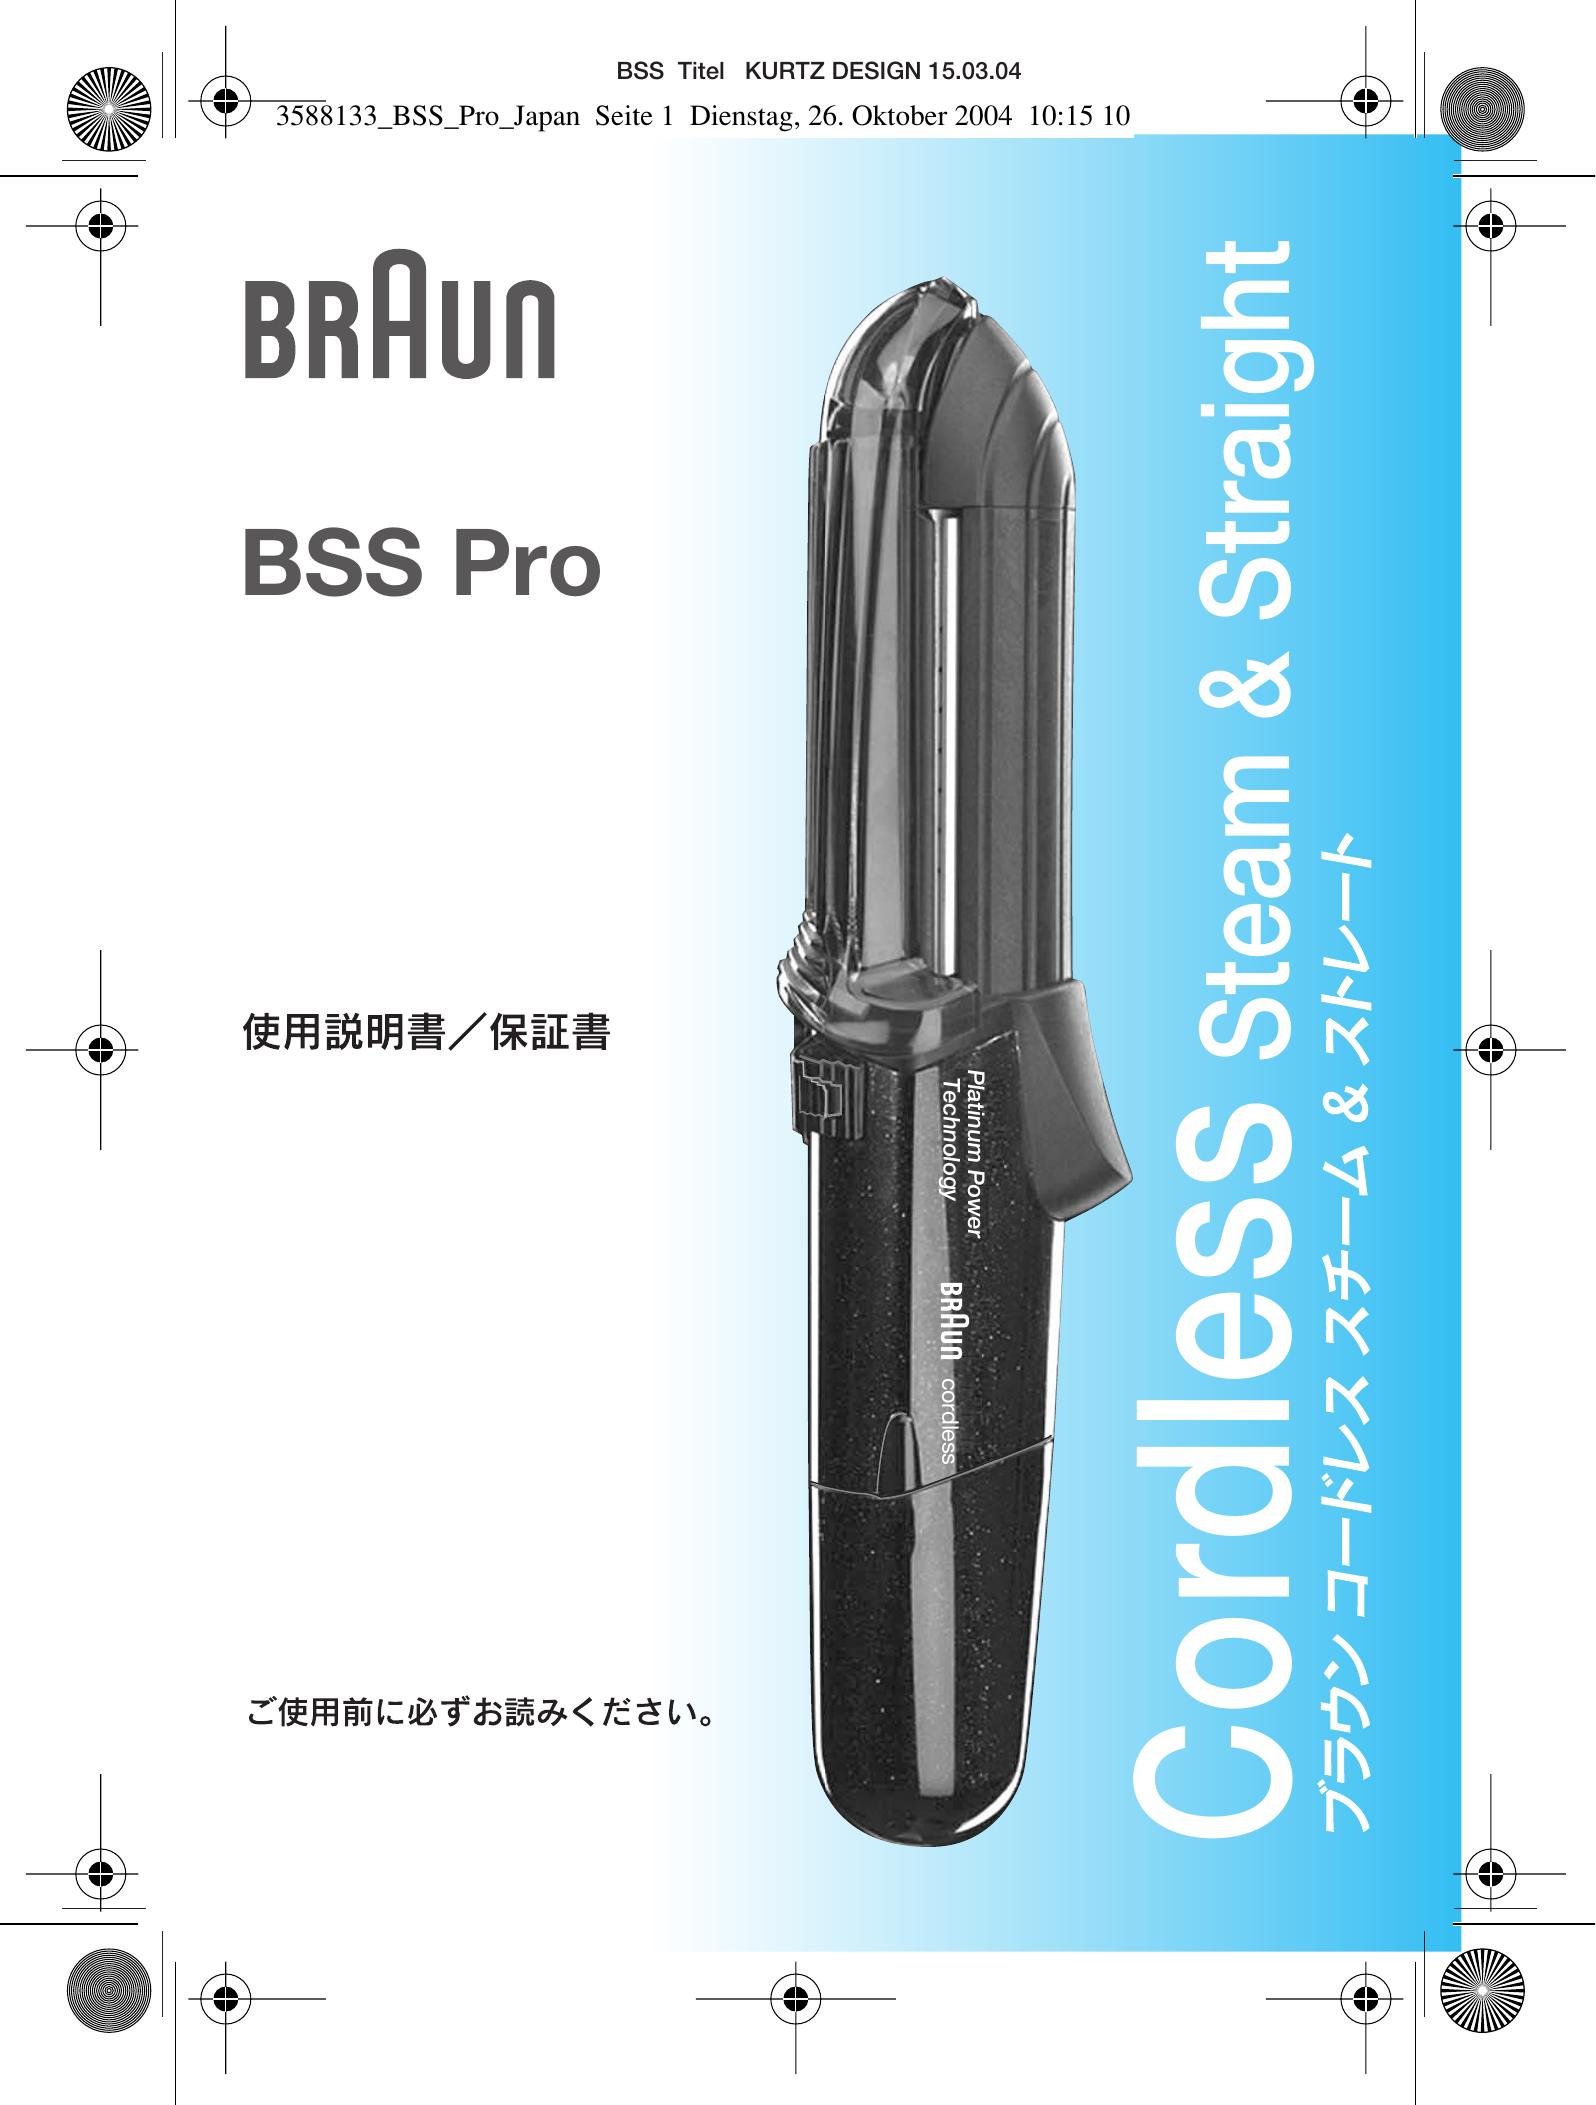 Braun BSS Pro Iron User Manual